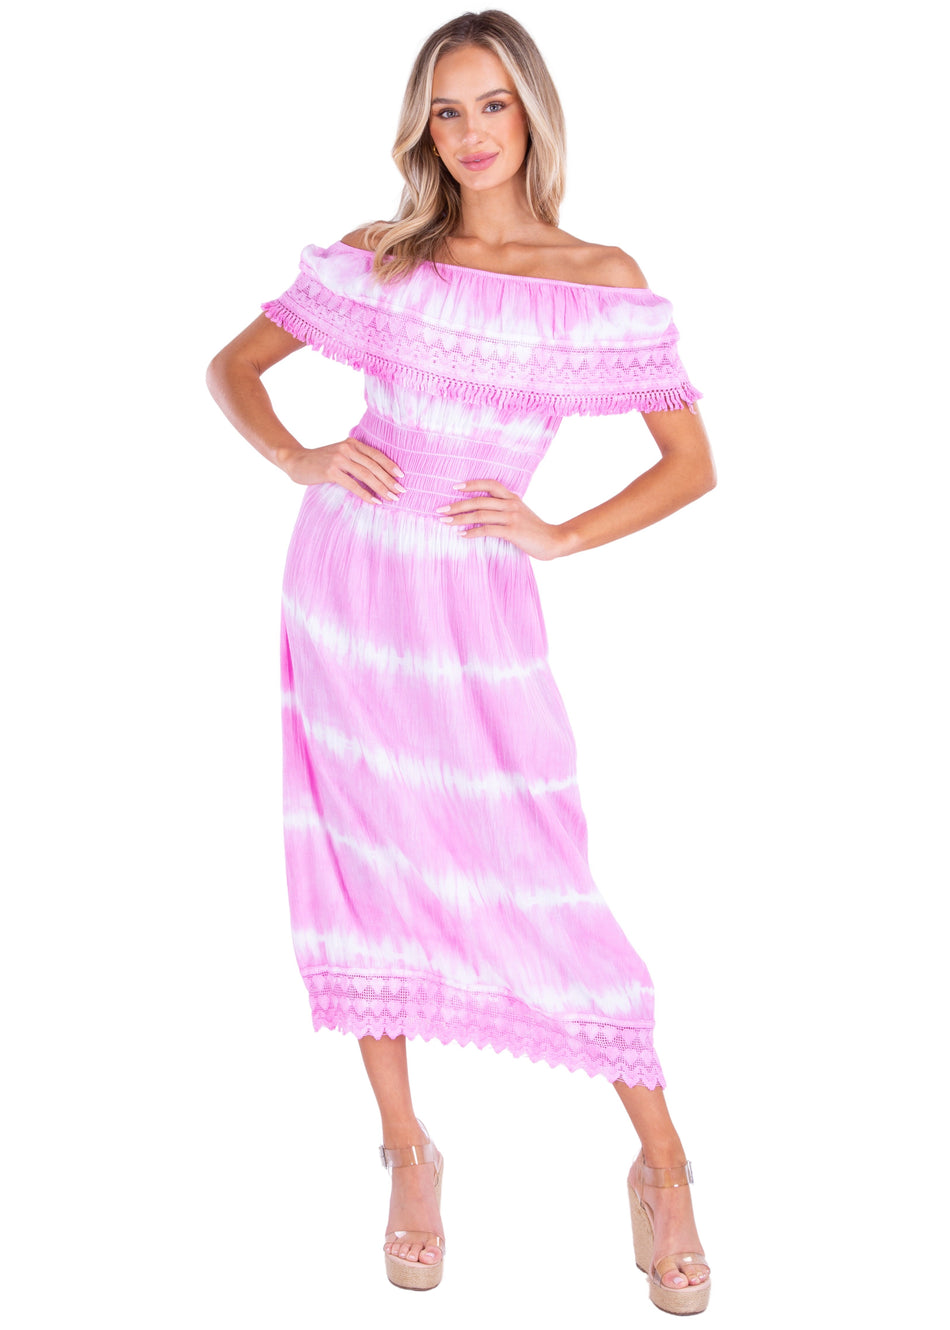 NW1079 - Pink Wash Dress